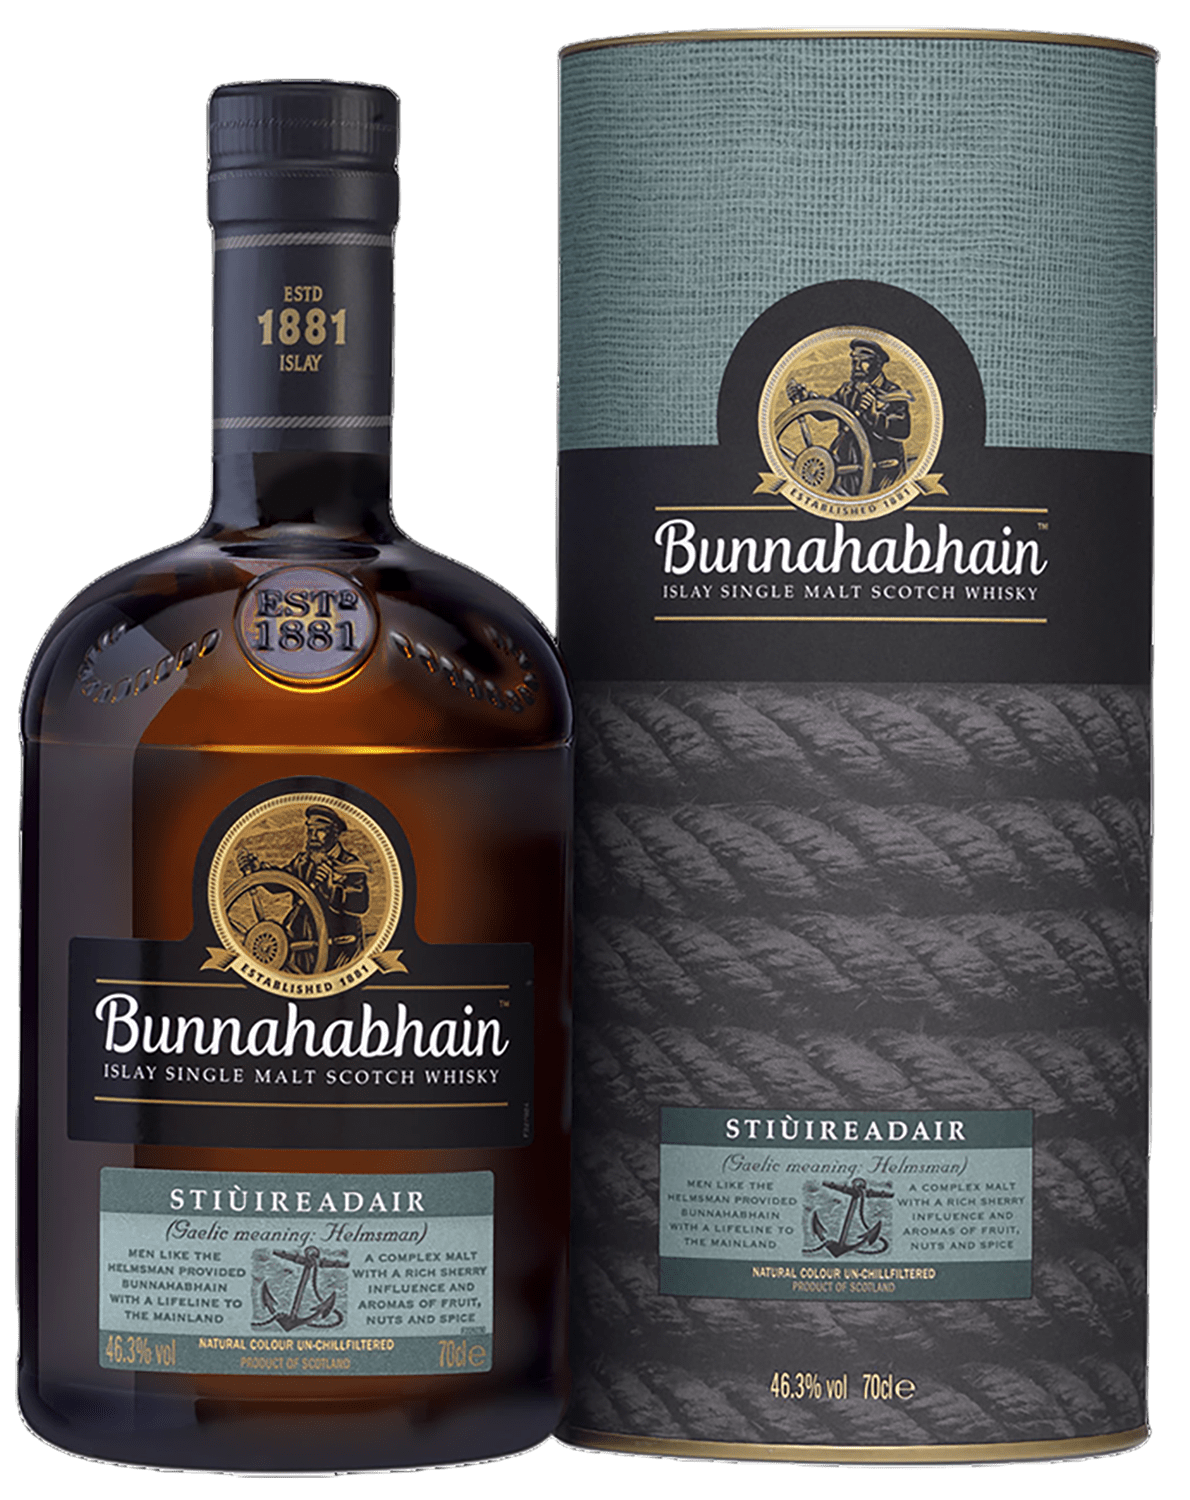 Bunnahabhain Stiuireadair Islay Single Malt Scotch Whisky (gift box) game of thrones house lannister lagavulin 9 y o islay single malt scotch whisky gift box